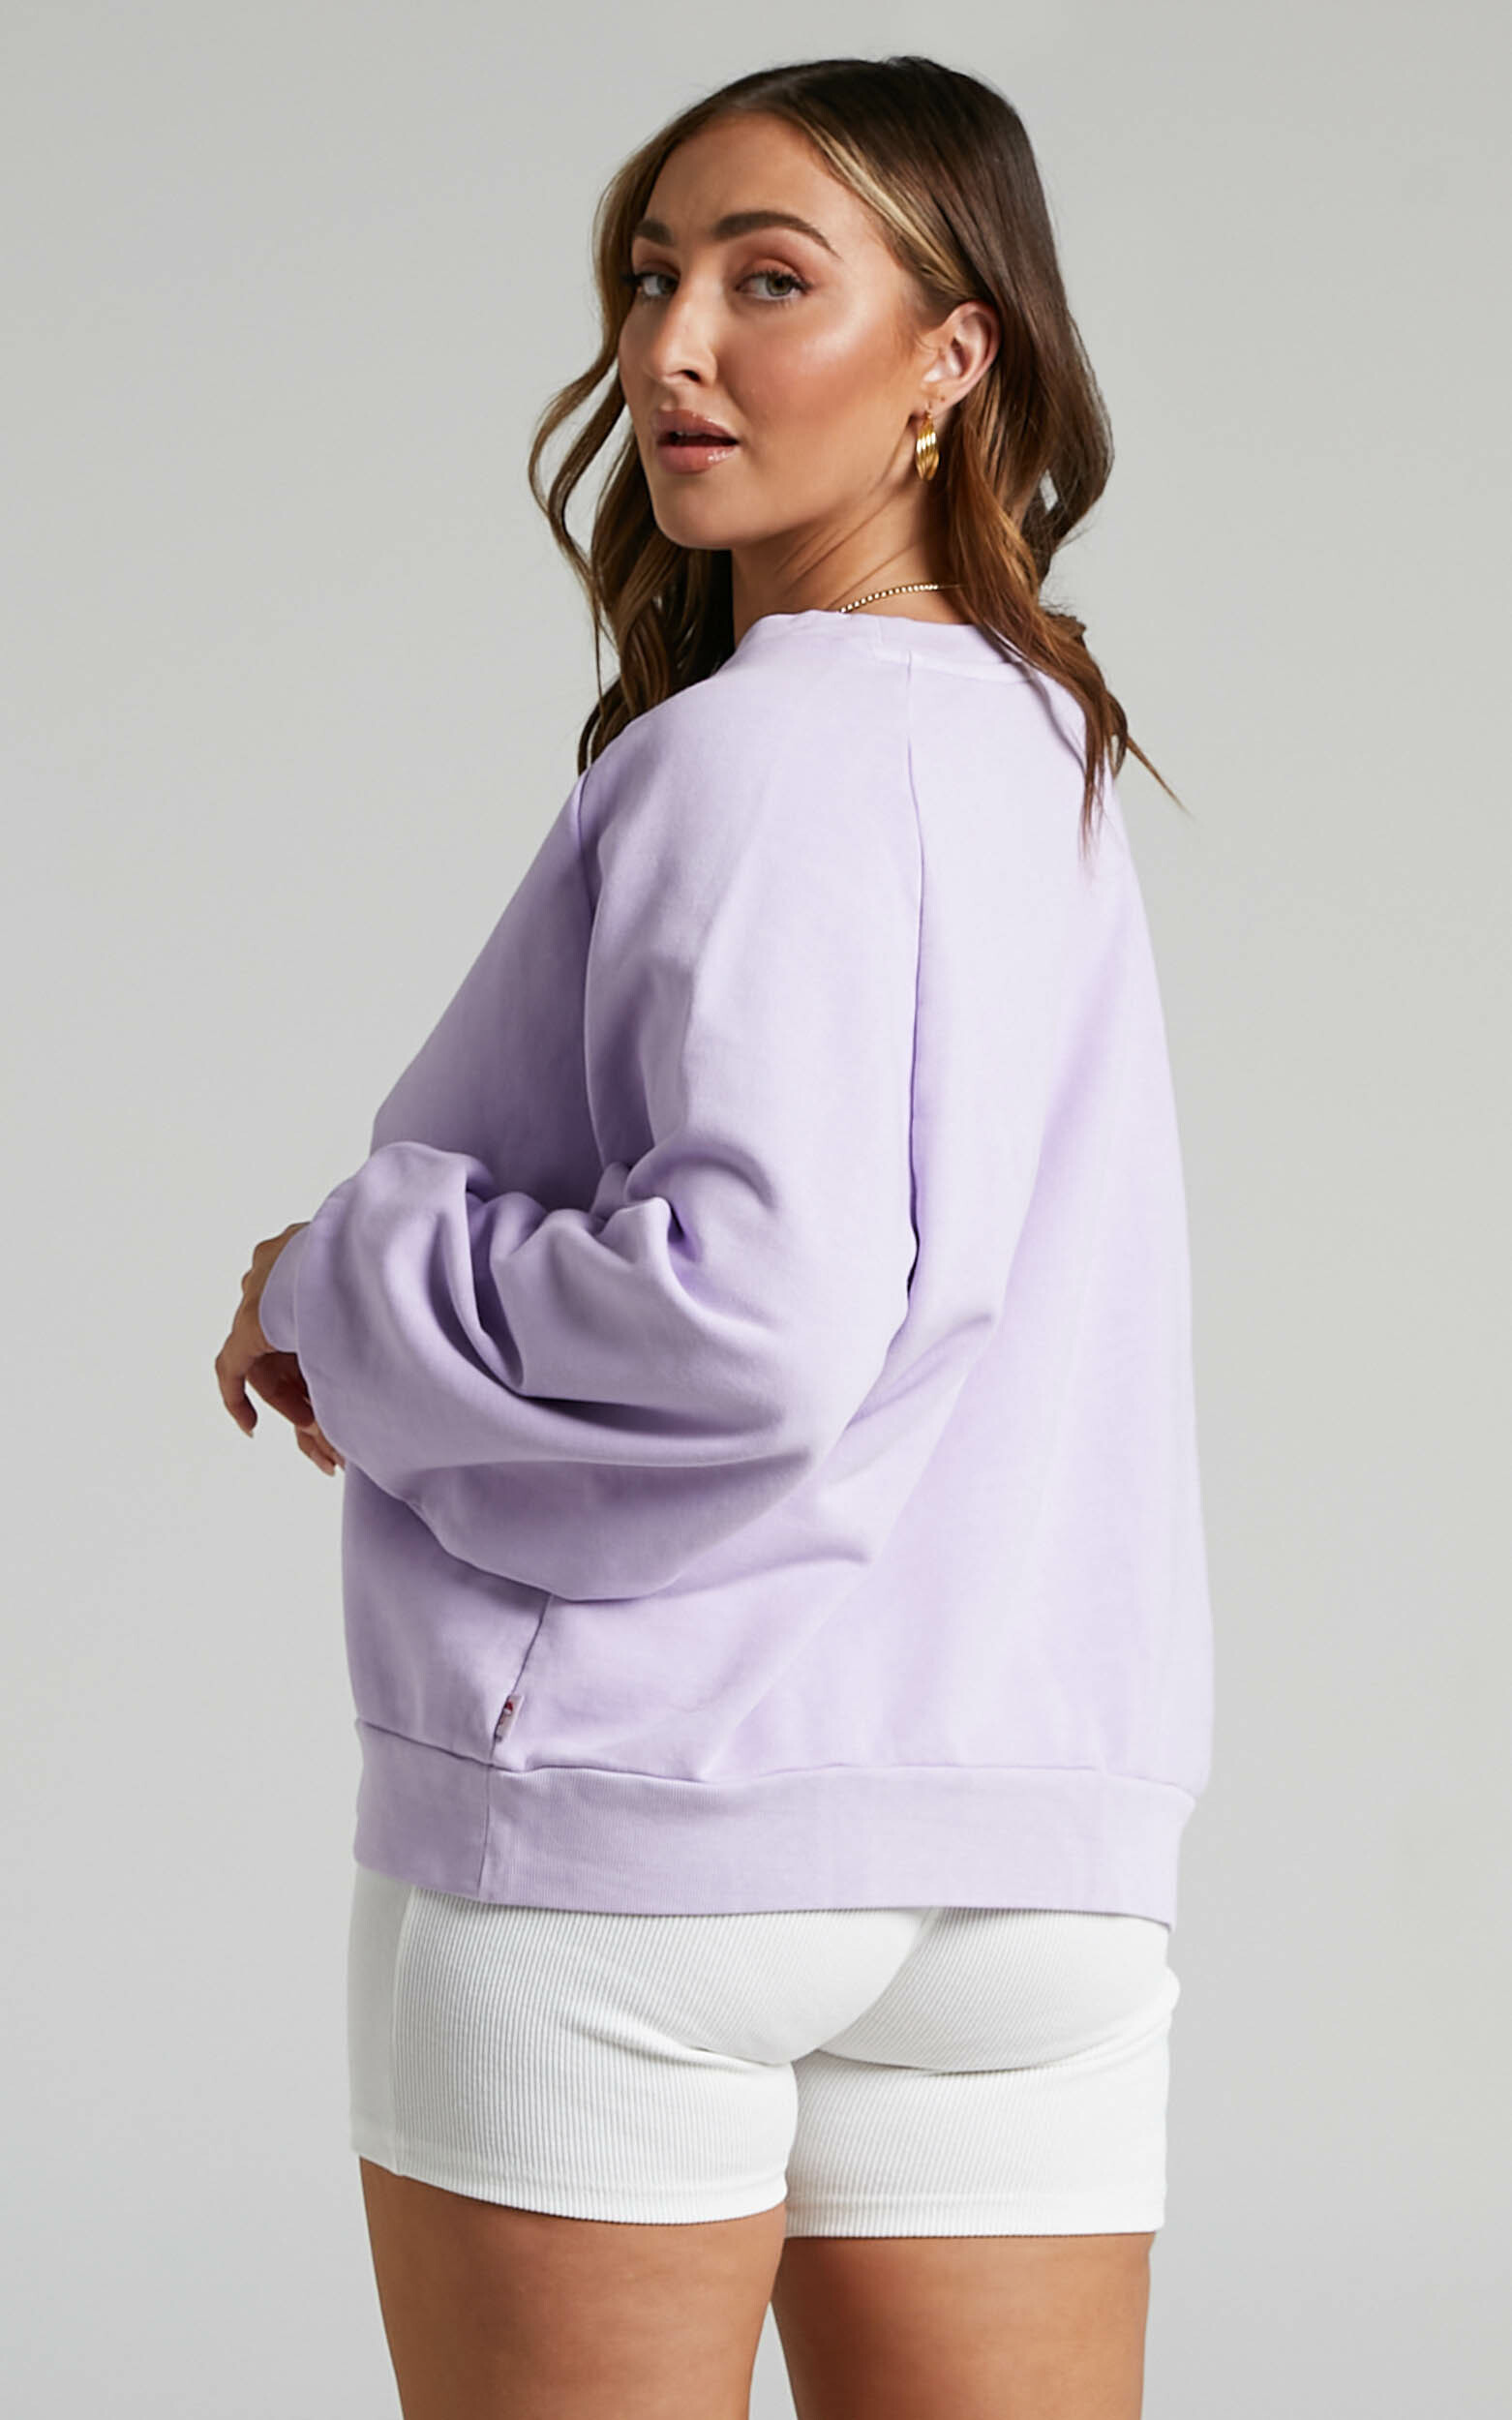 Levi's - Natural Dye Snack Sweatshirt in Mid Saturated Purple | Showpo